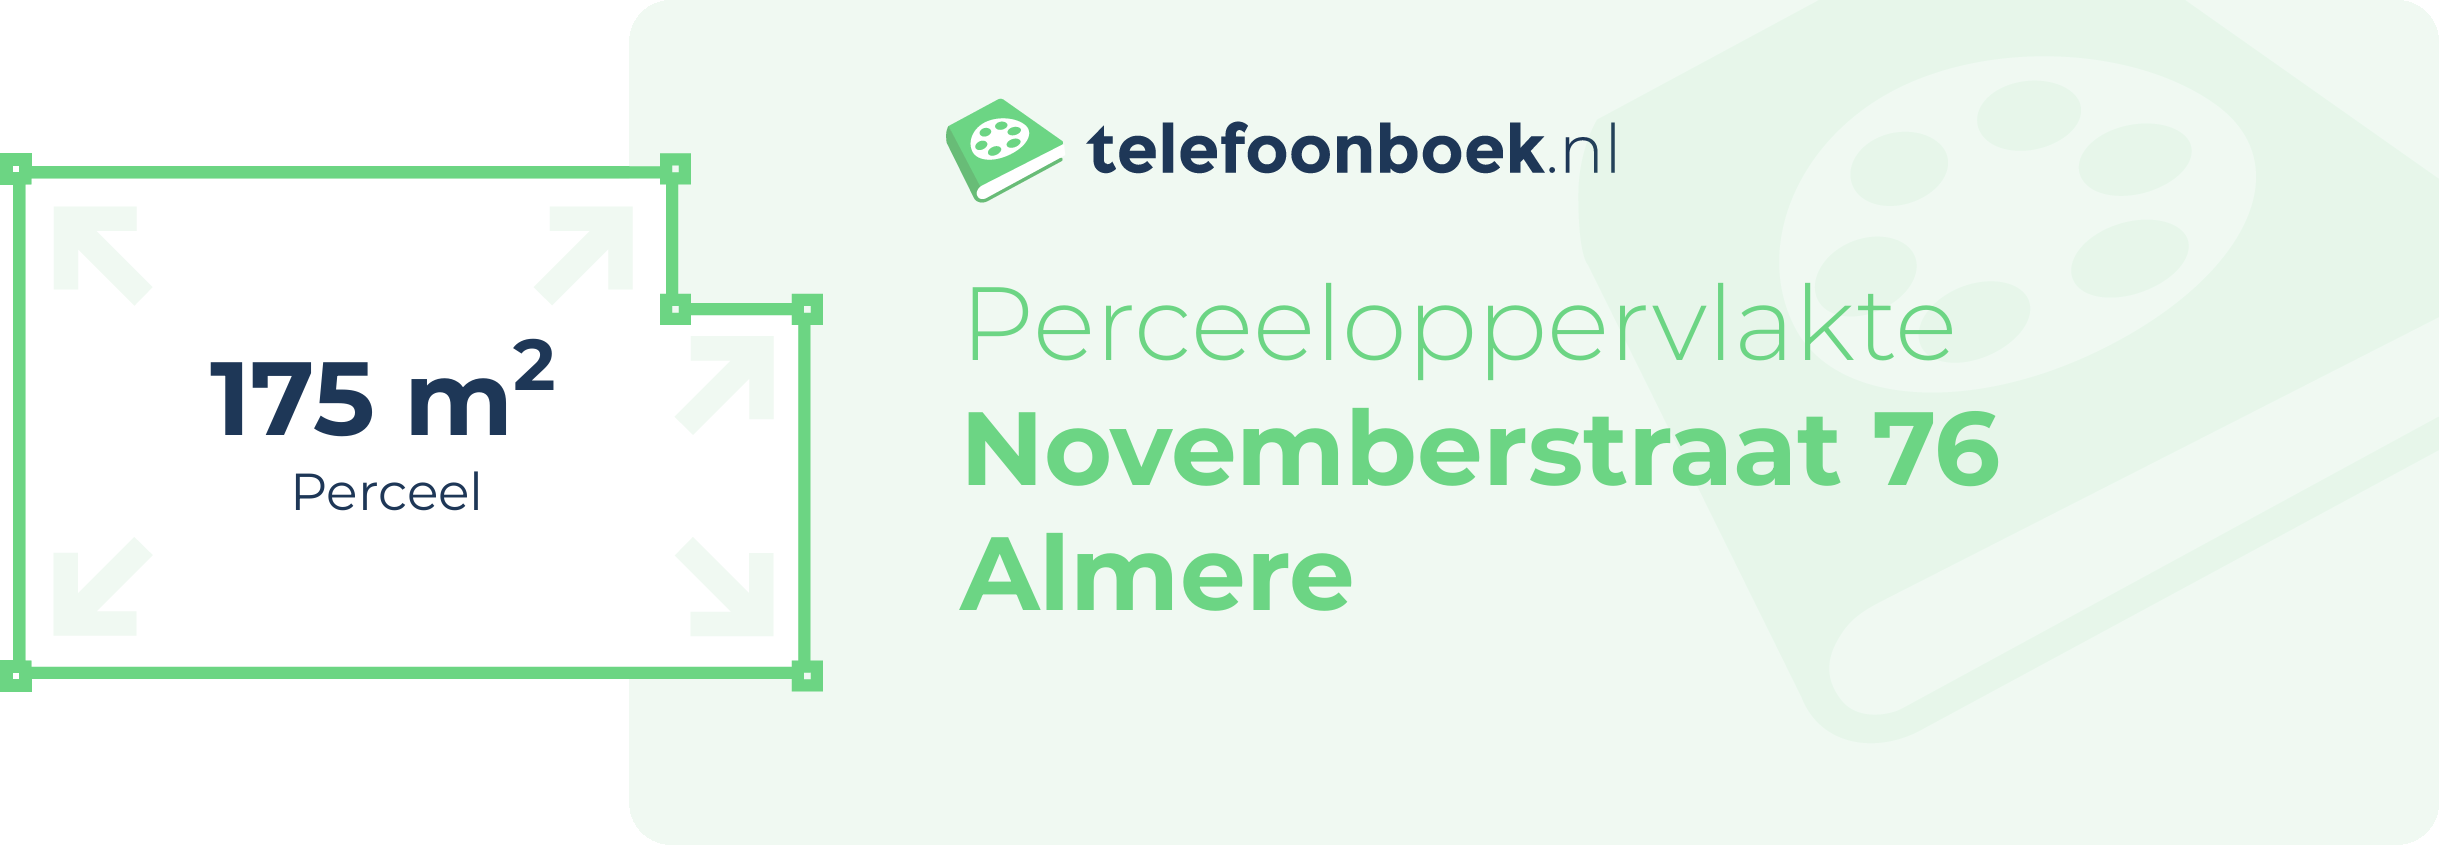 Perceeloppervlakte Novemberstraat 76 Almere